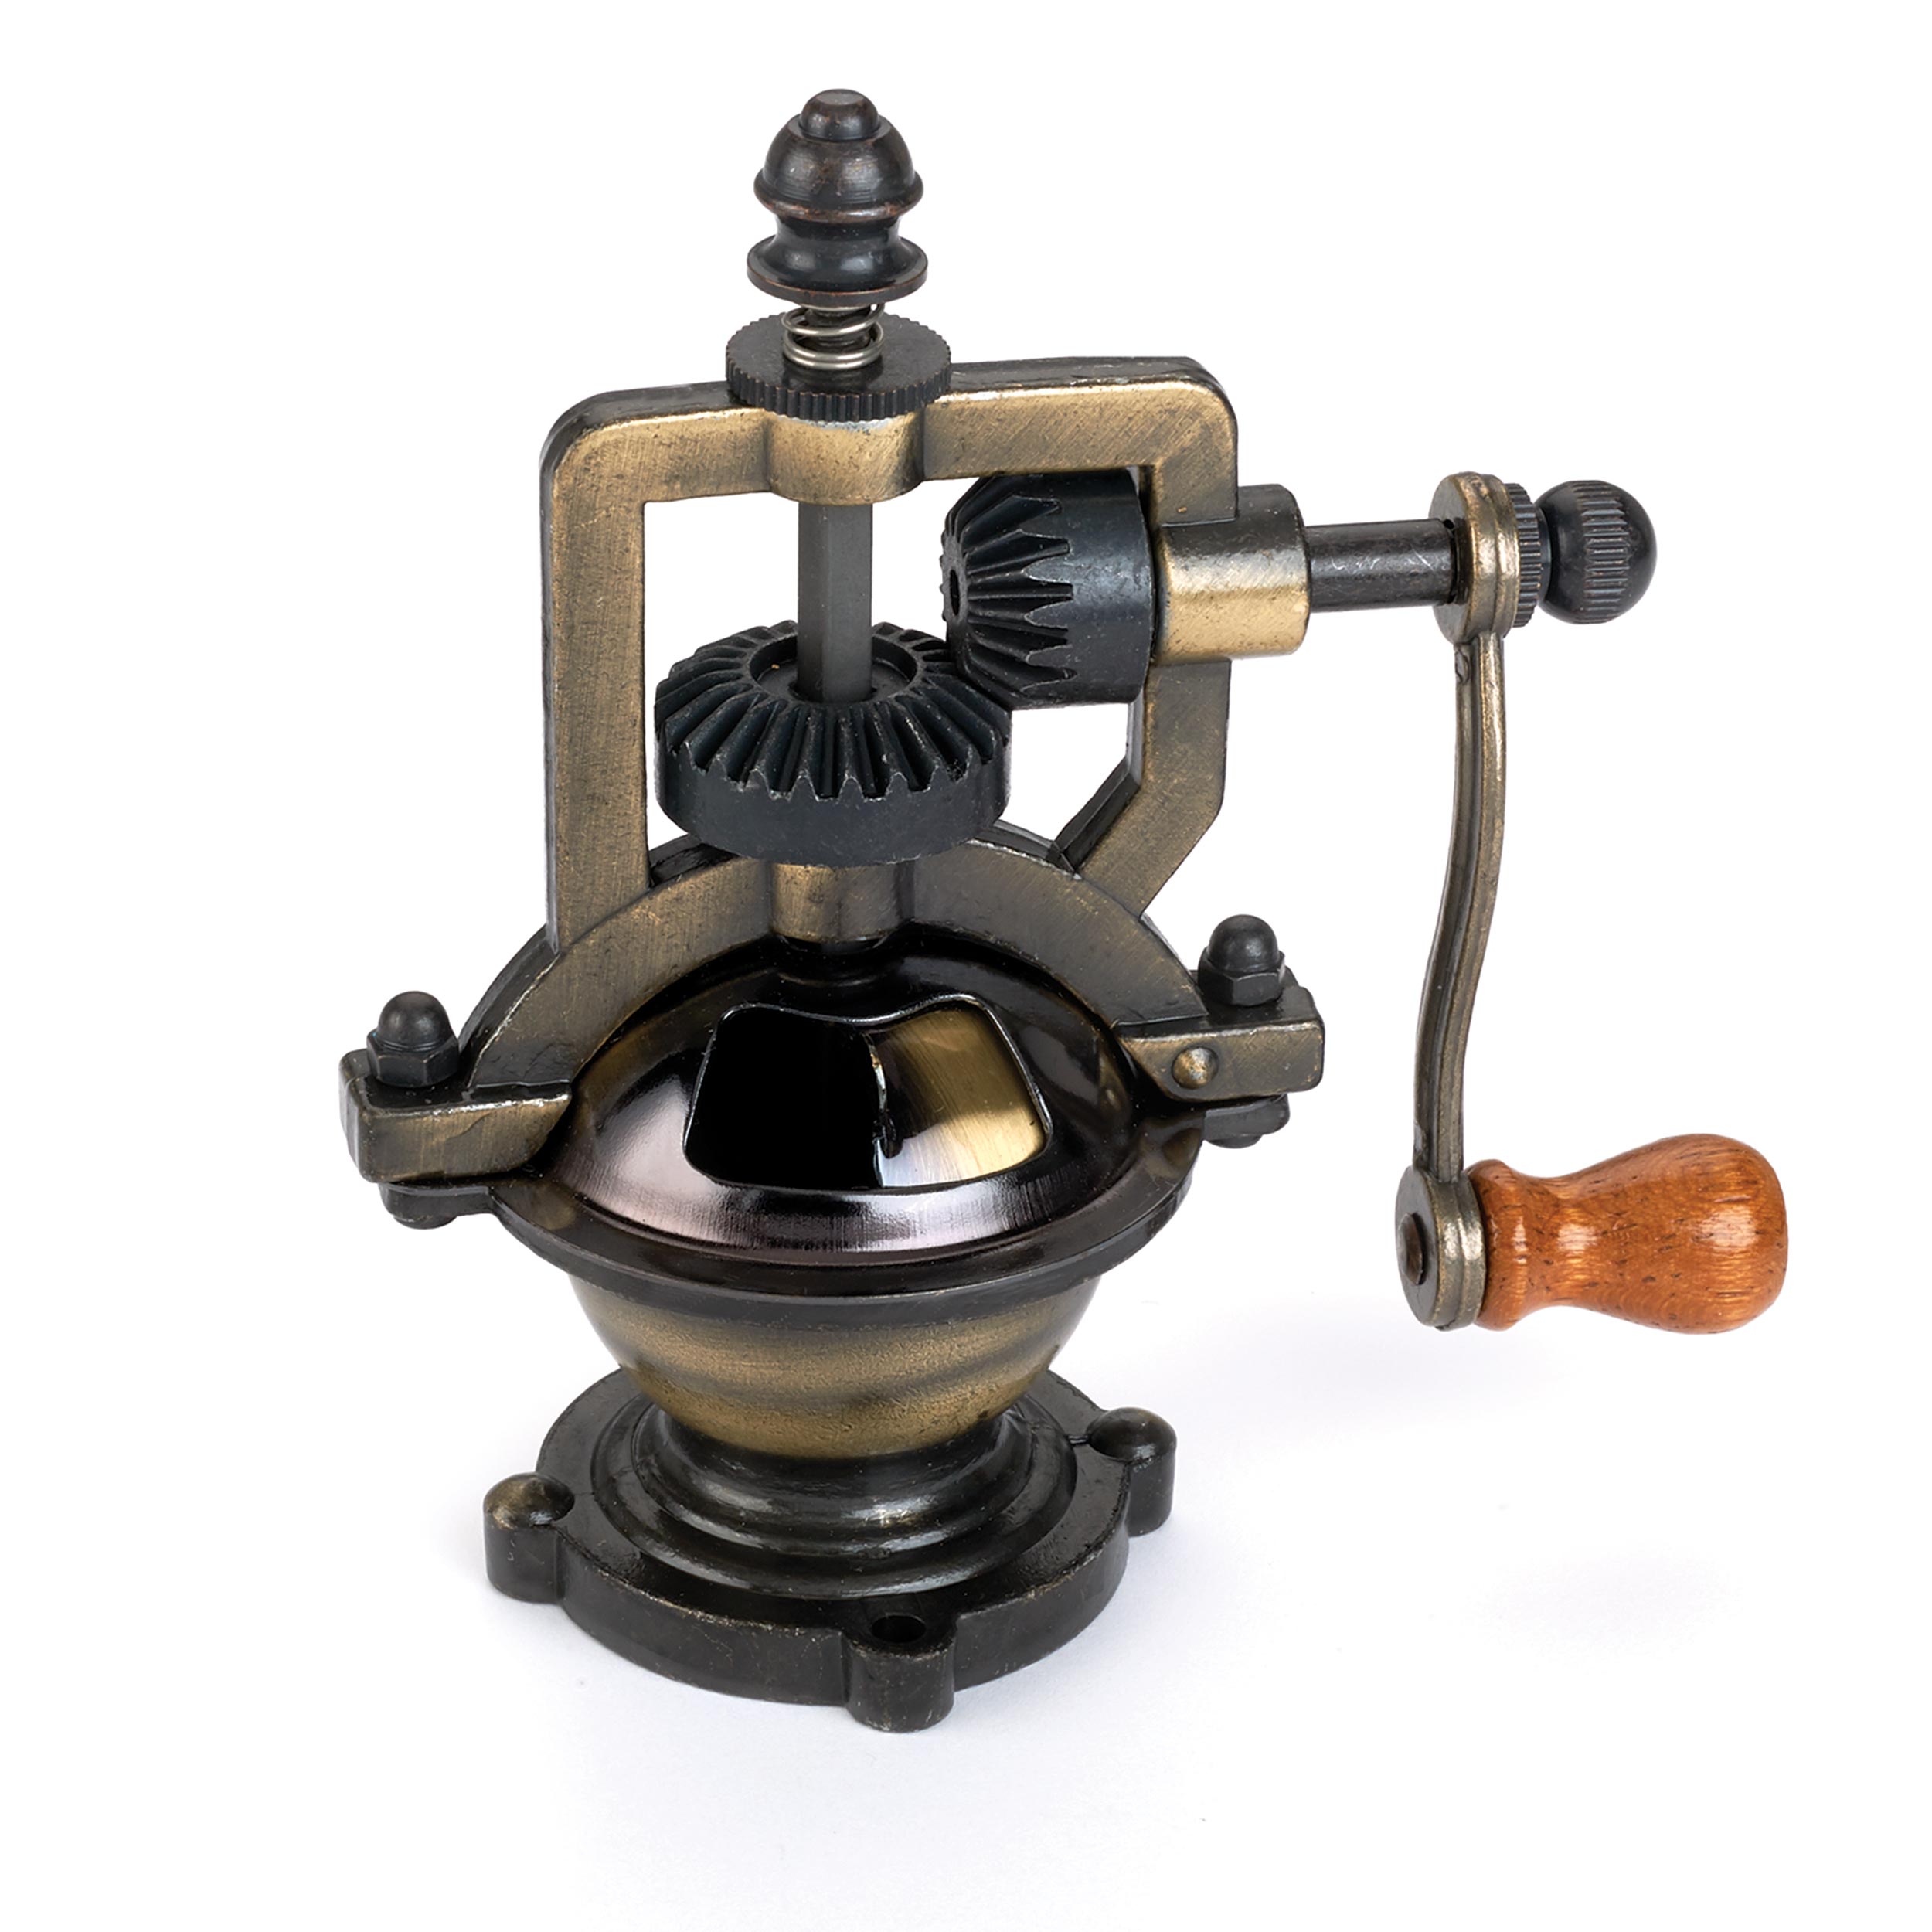 Antique Style Hand Crank Pepper Grinder Kit Mechanism - Antique Brass